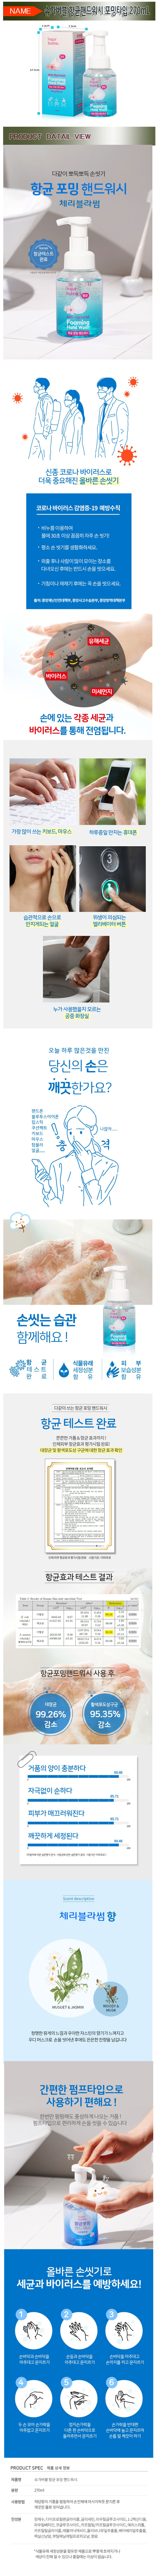 handwash1.jpg